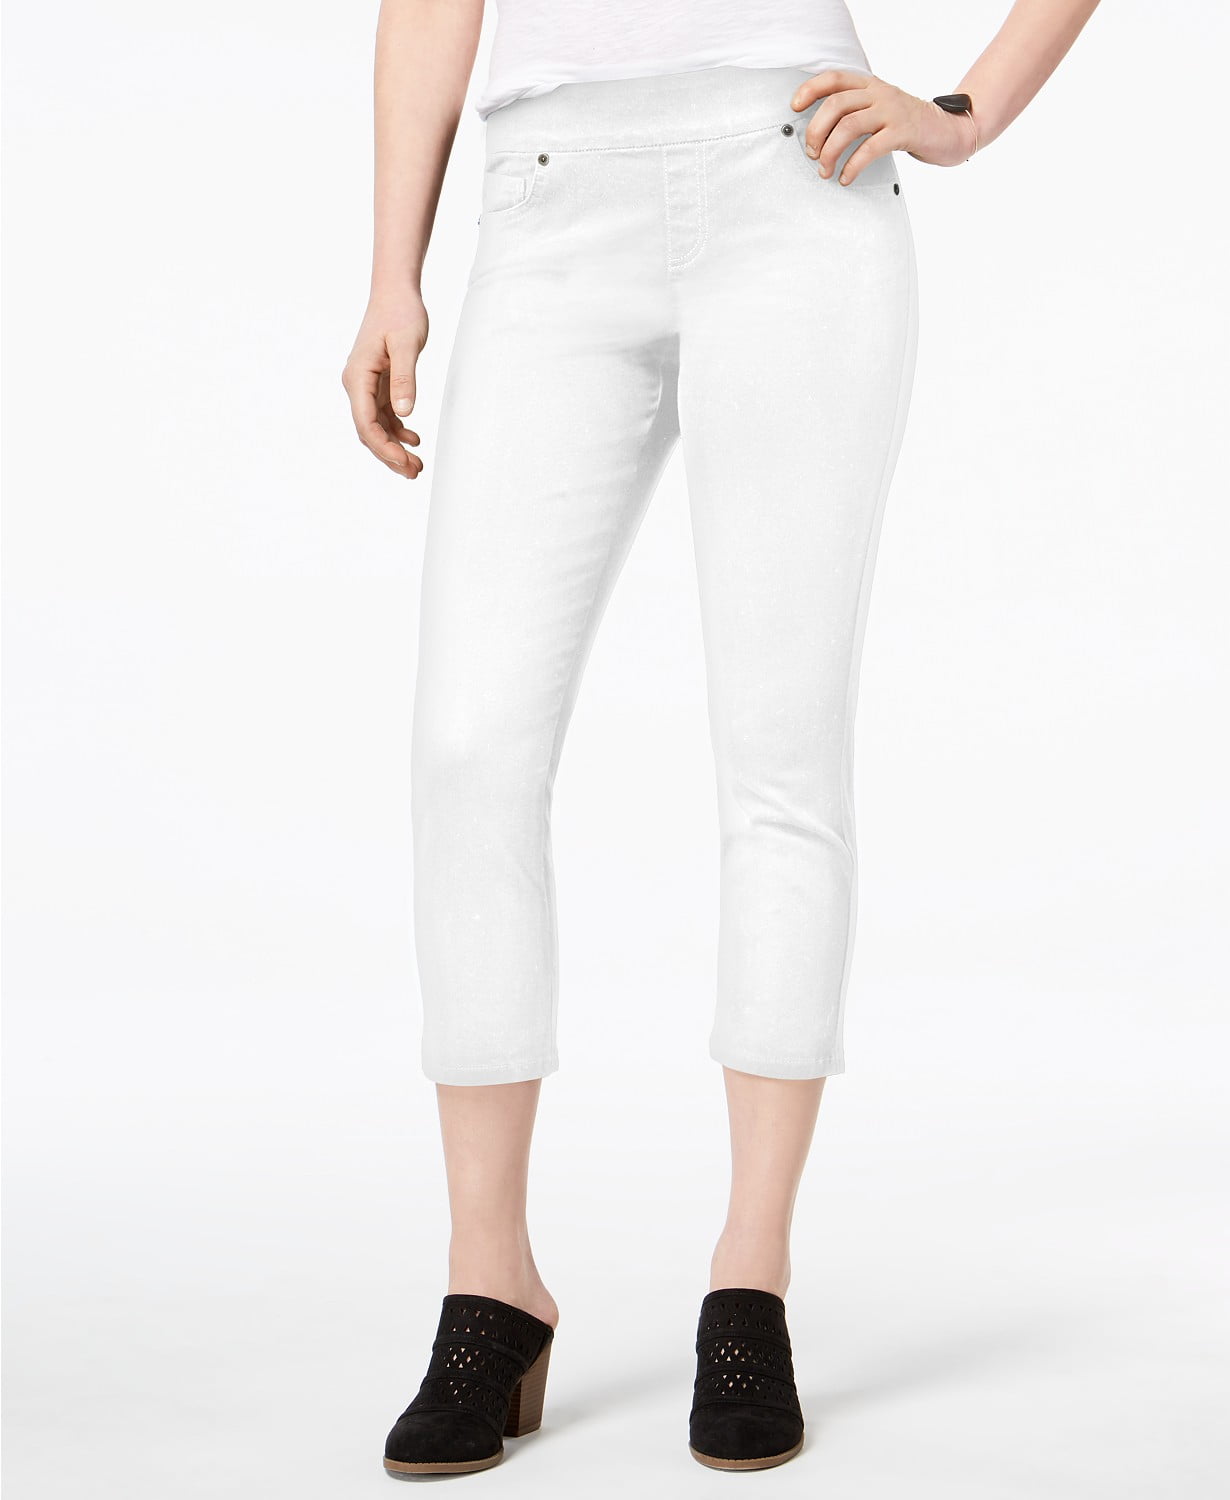 Women's Large Petite Stretch Skinny Capri Jeans PL - Walmart.com